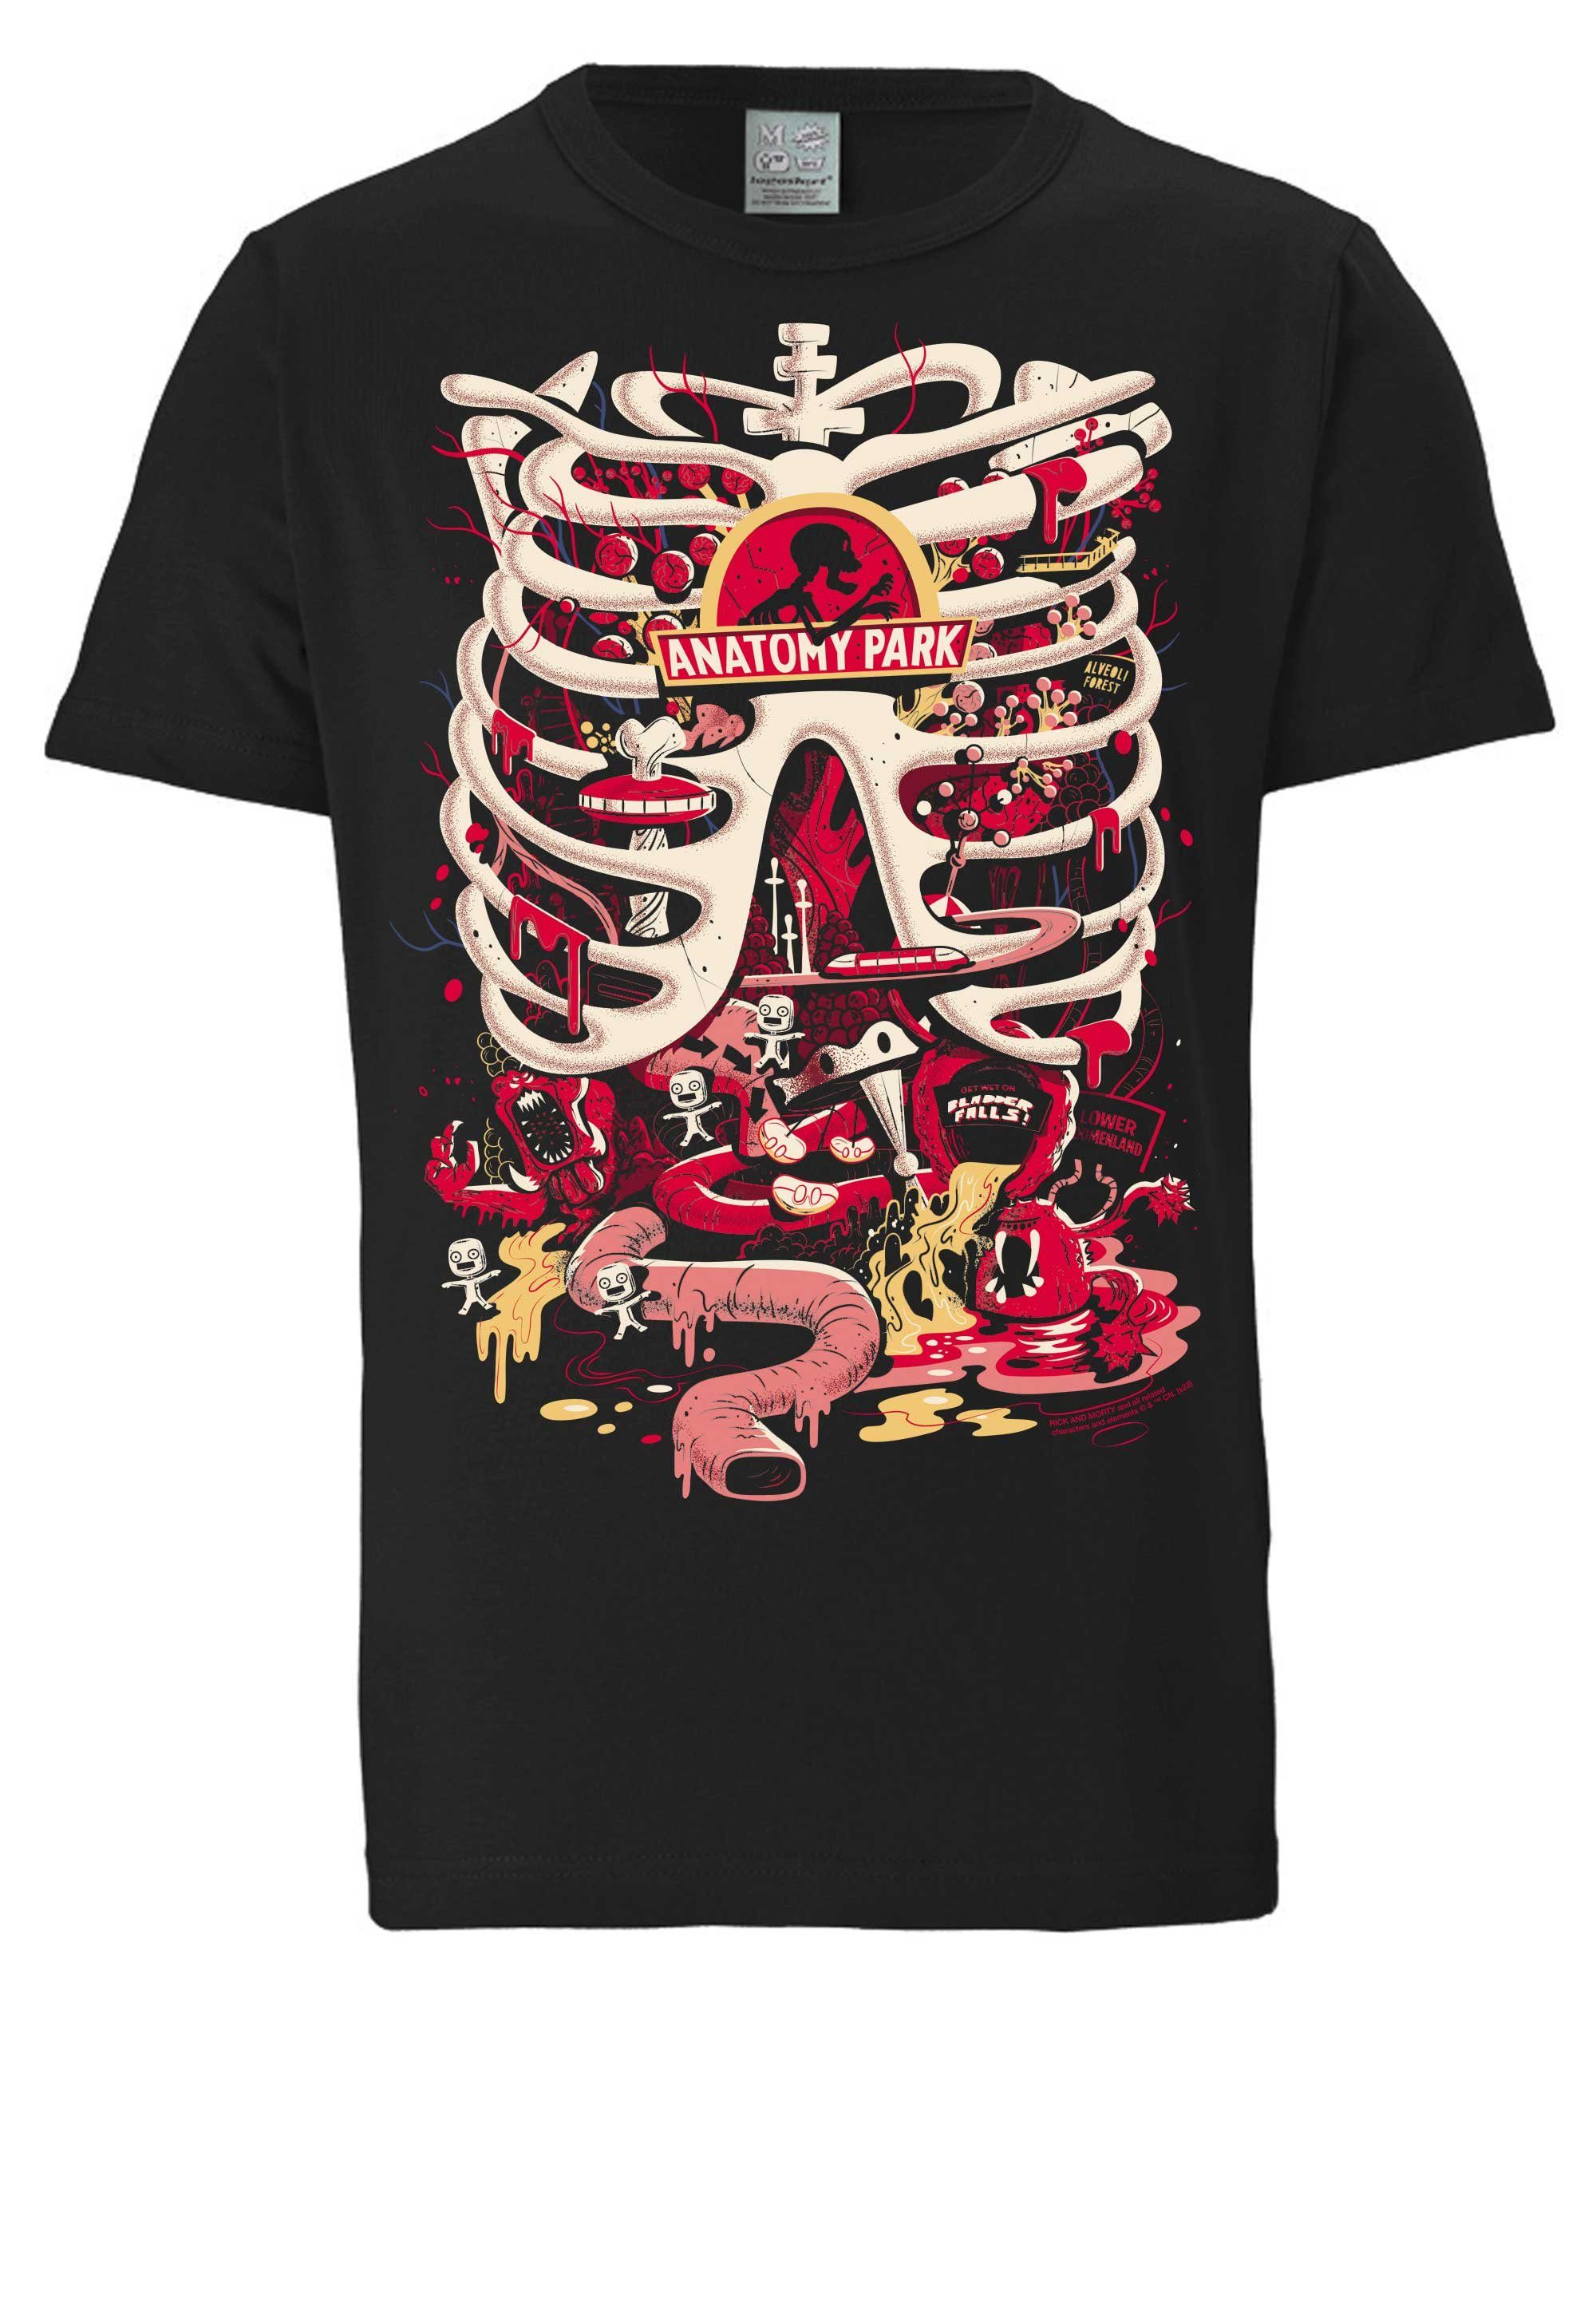 mit - Anatomy Park Rick Print coolem Morty & LOGOSHIRT T-Shirt